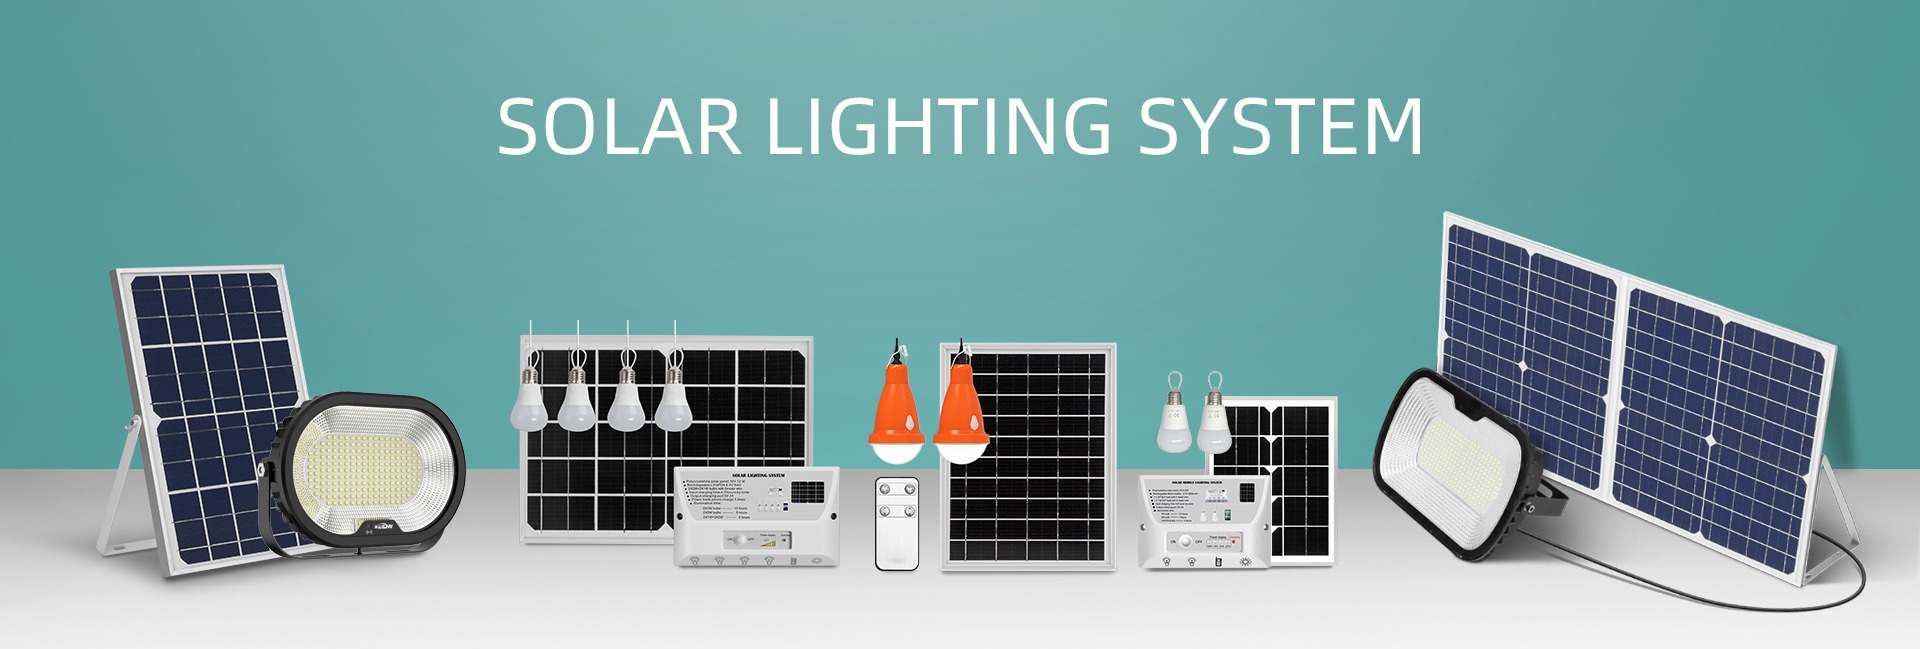 led solar light system